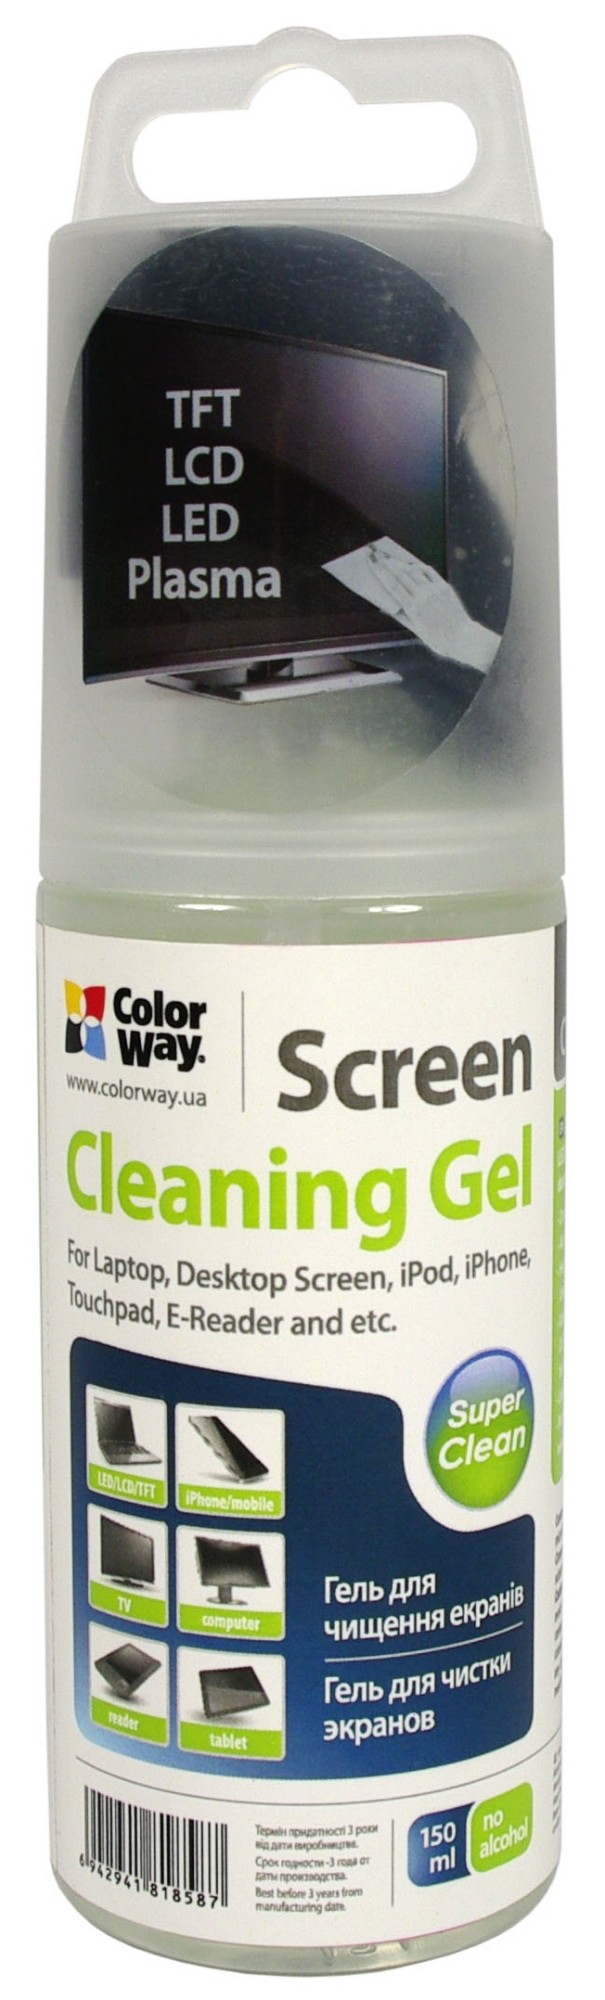 Colorway CW-5151 all-purpose cleaner Gel 150 ml